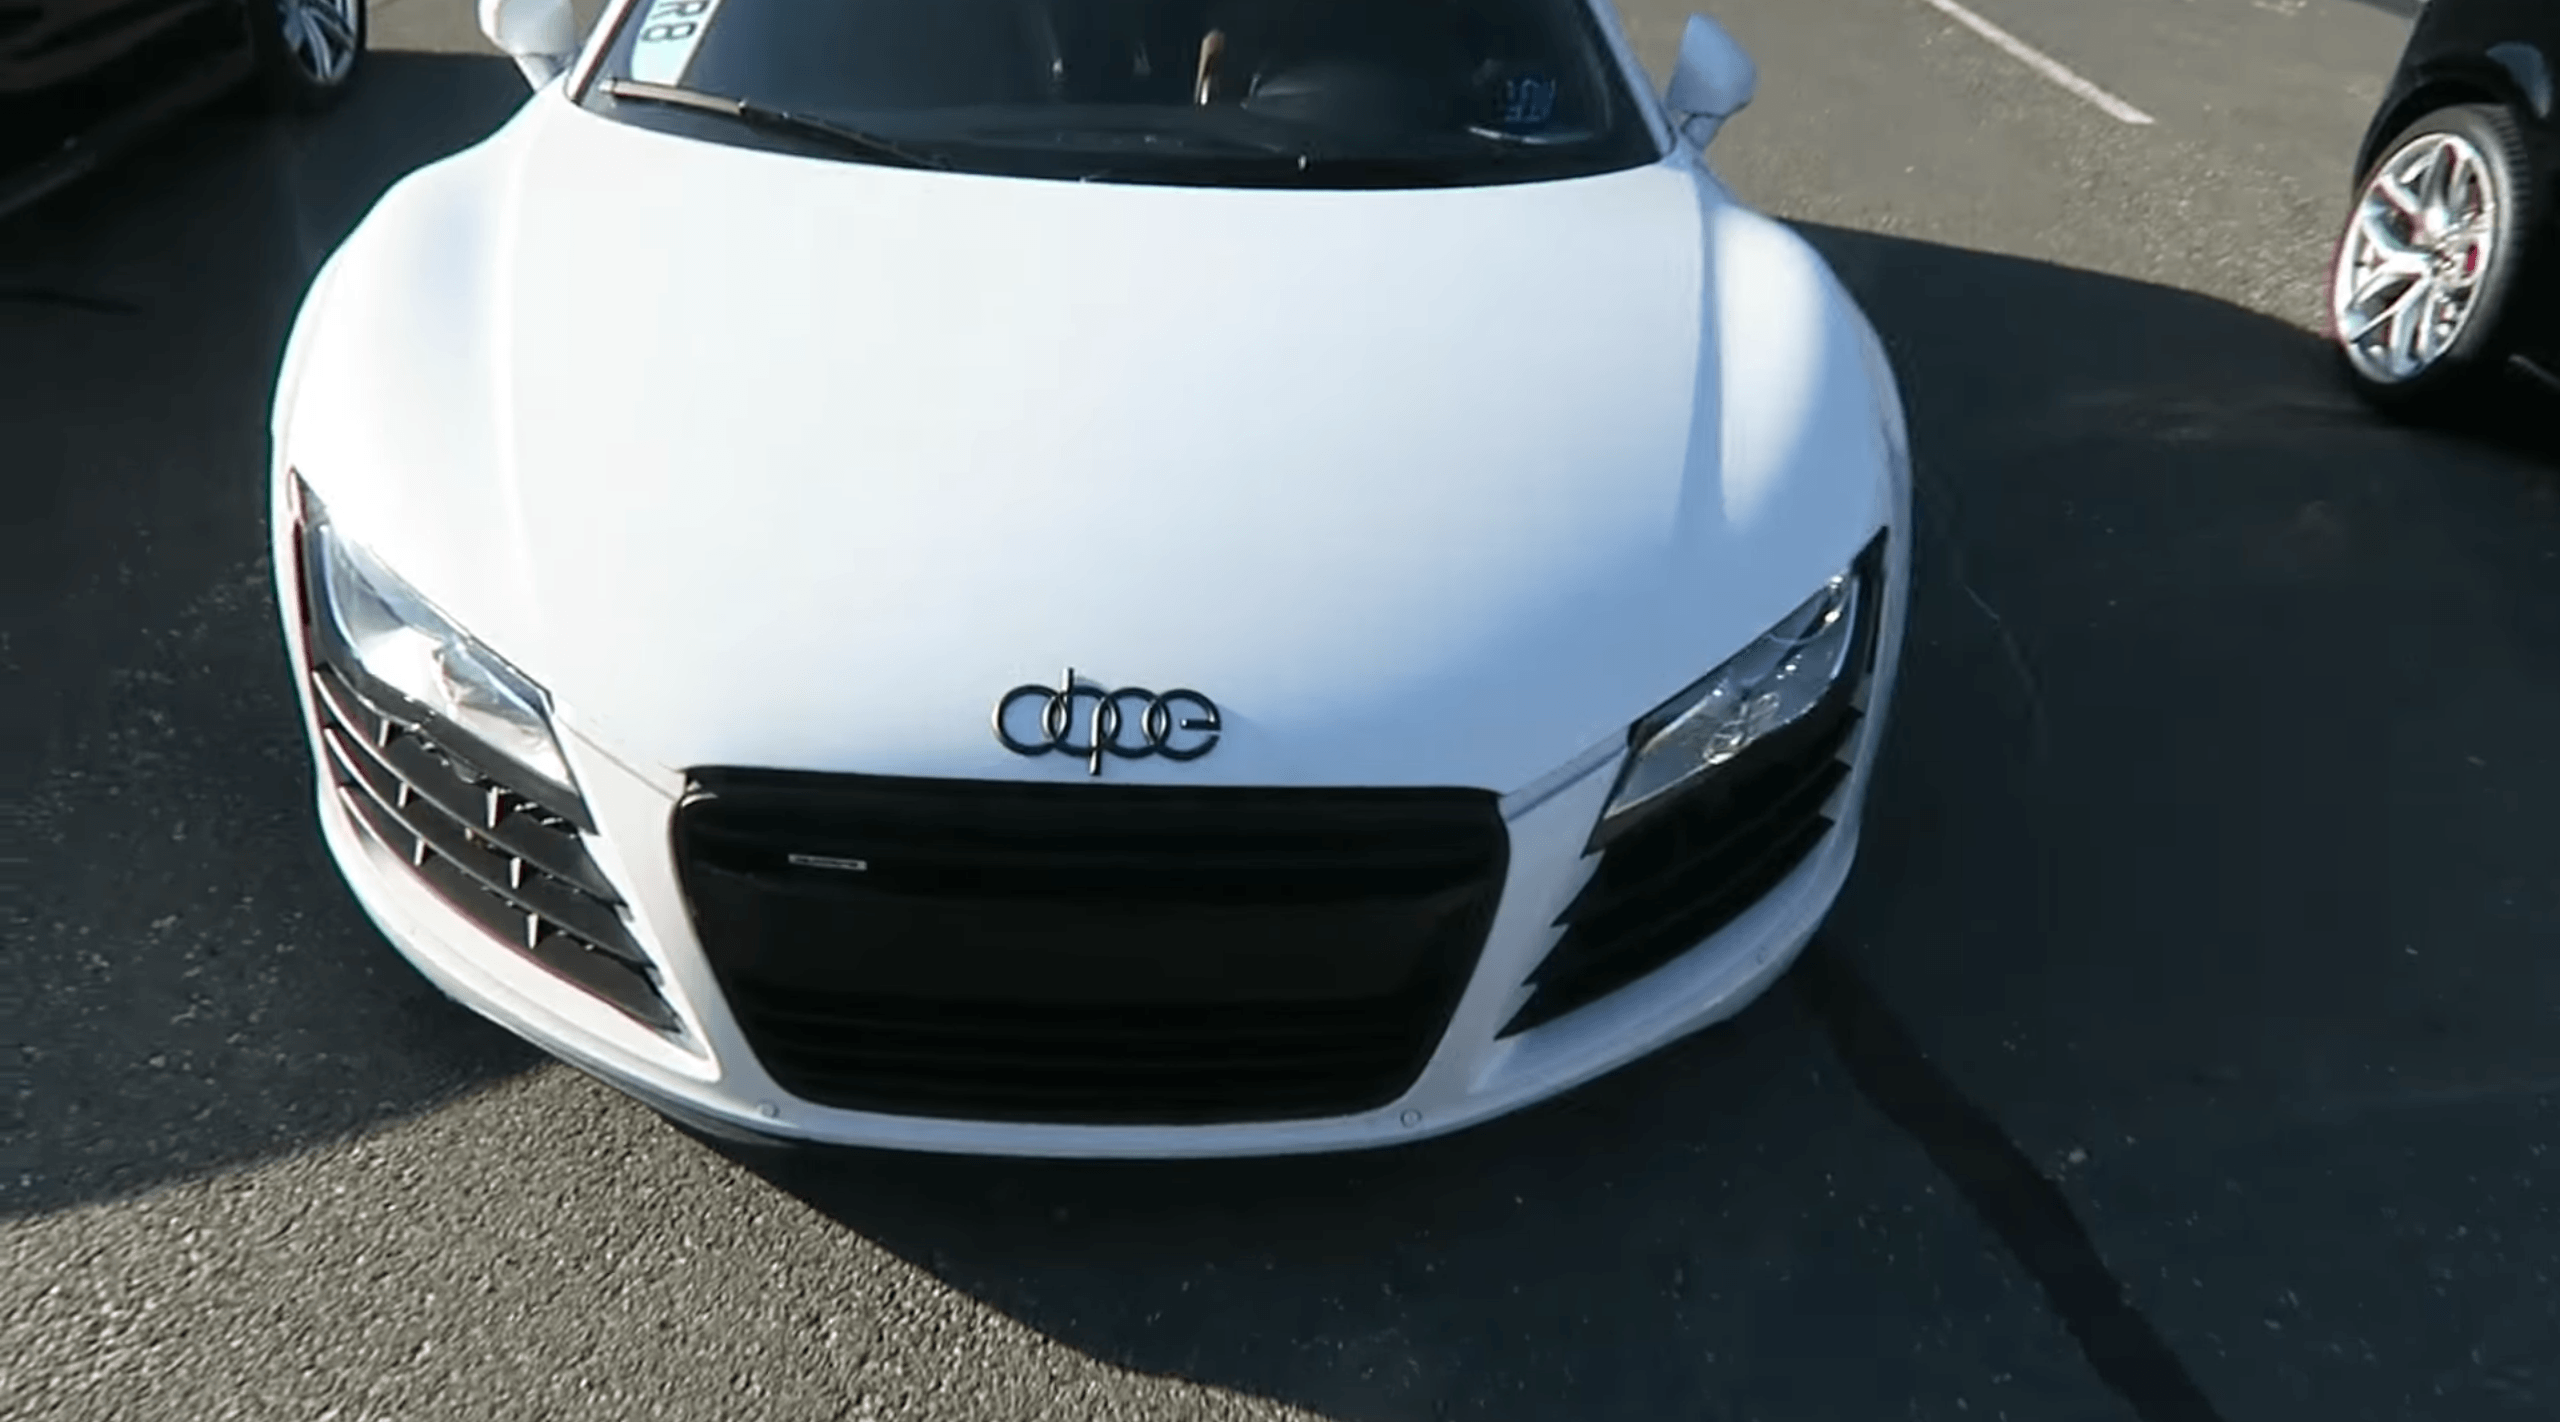 Audi Dope Logo - This audi hood ornament spells dope